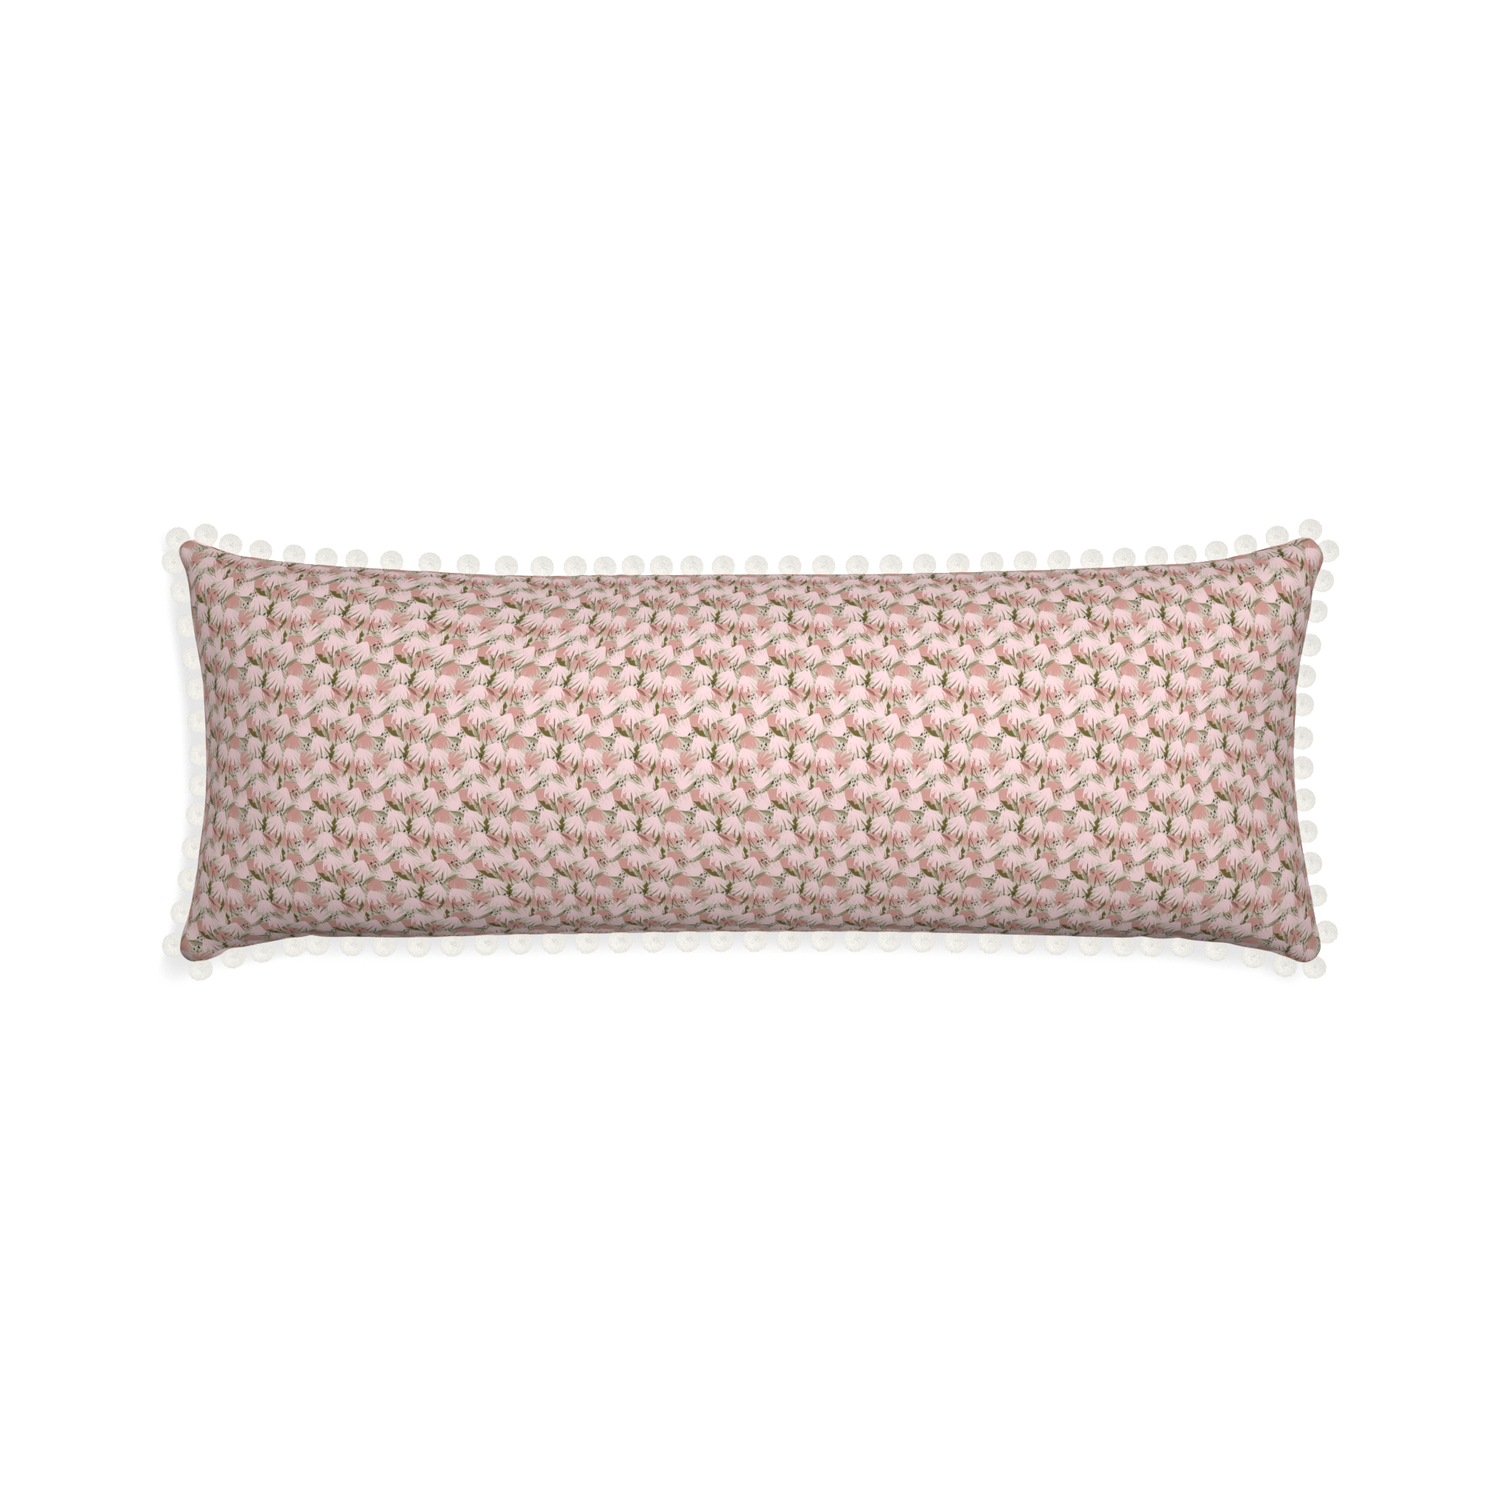 Xl-lumbar eden pink custom pillow with snow pom pom on white background